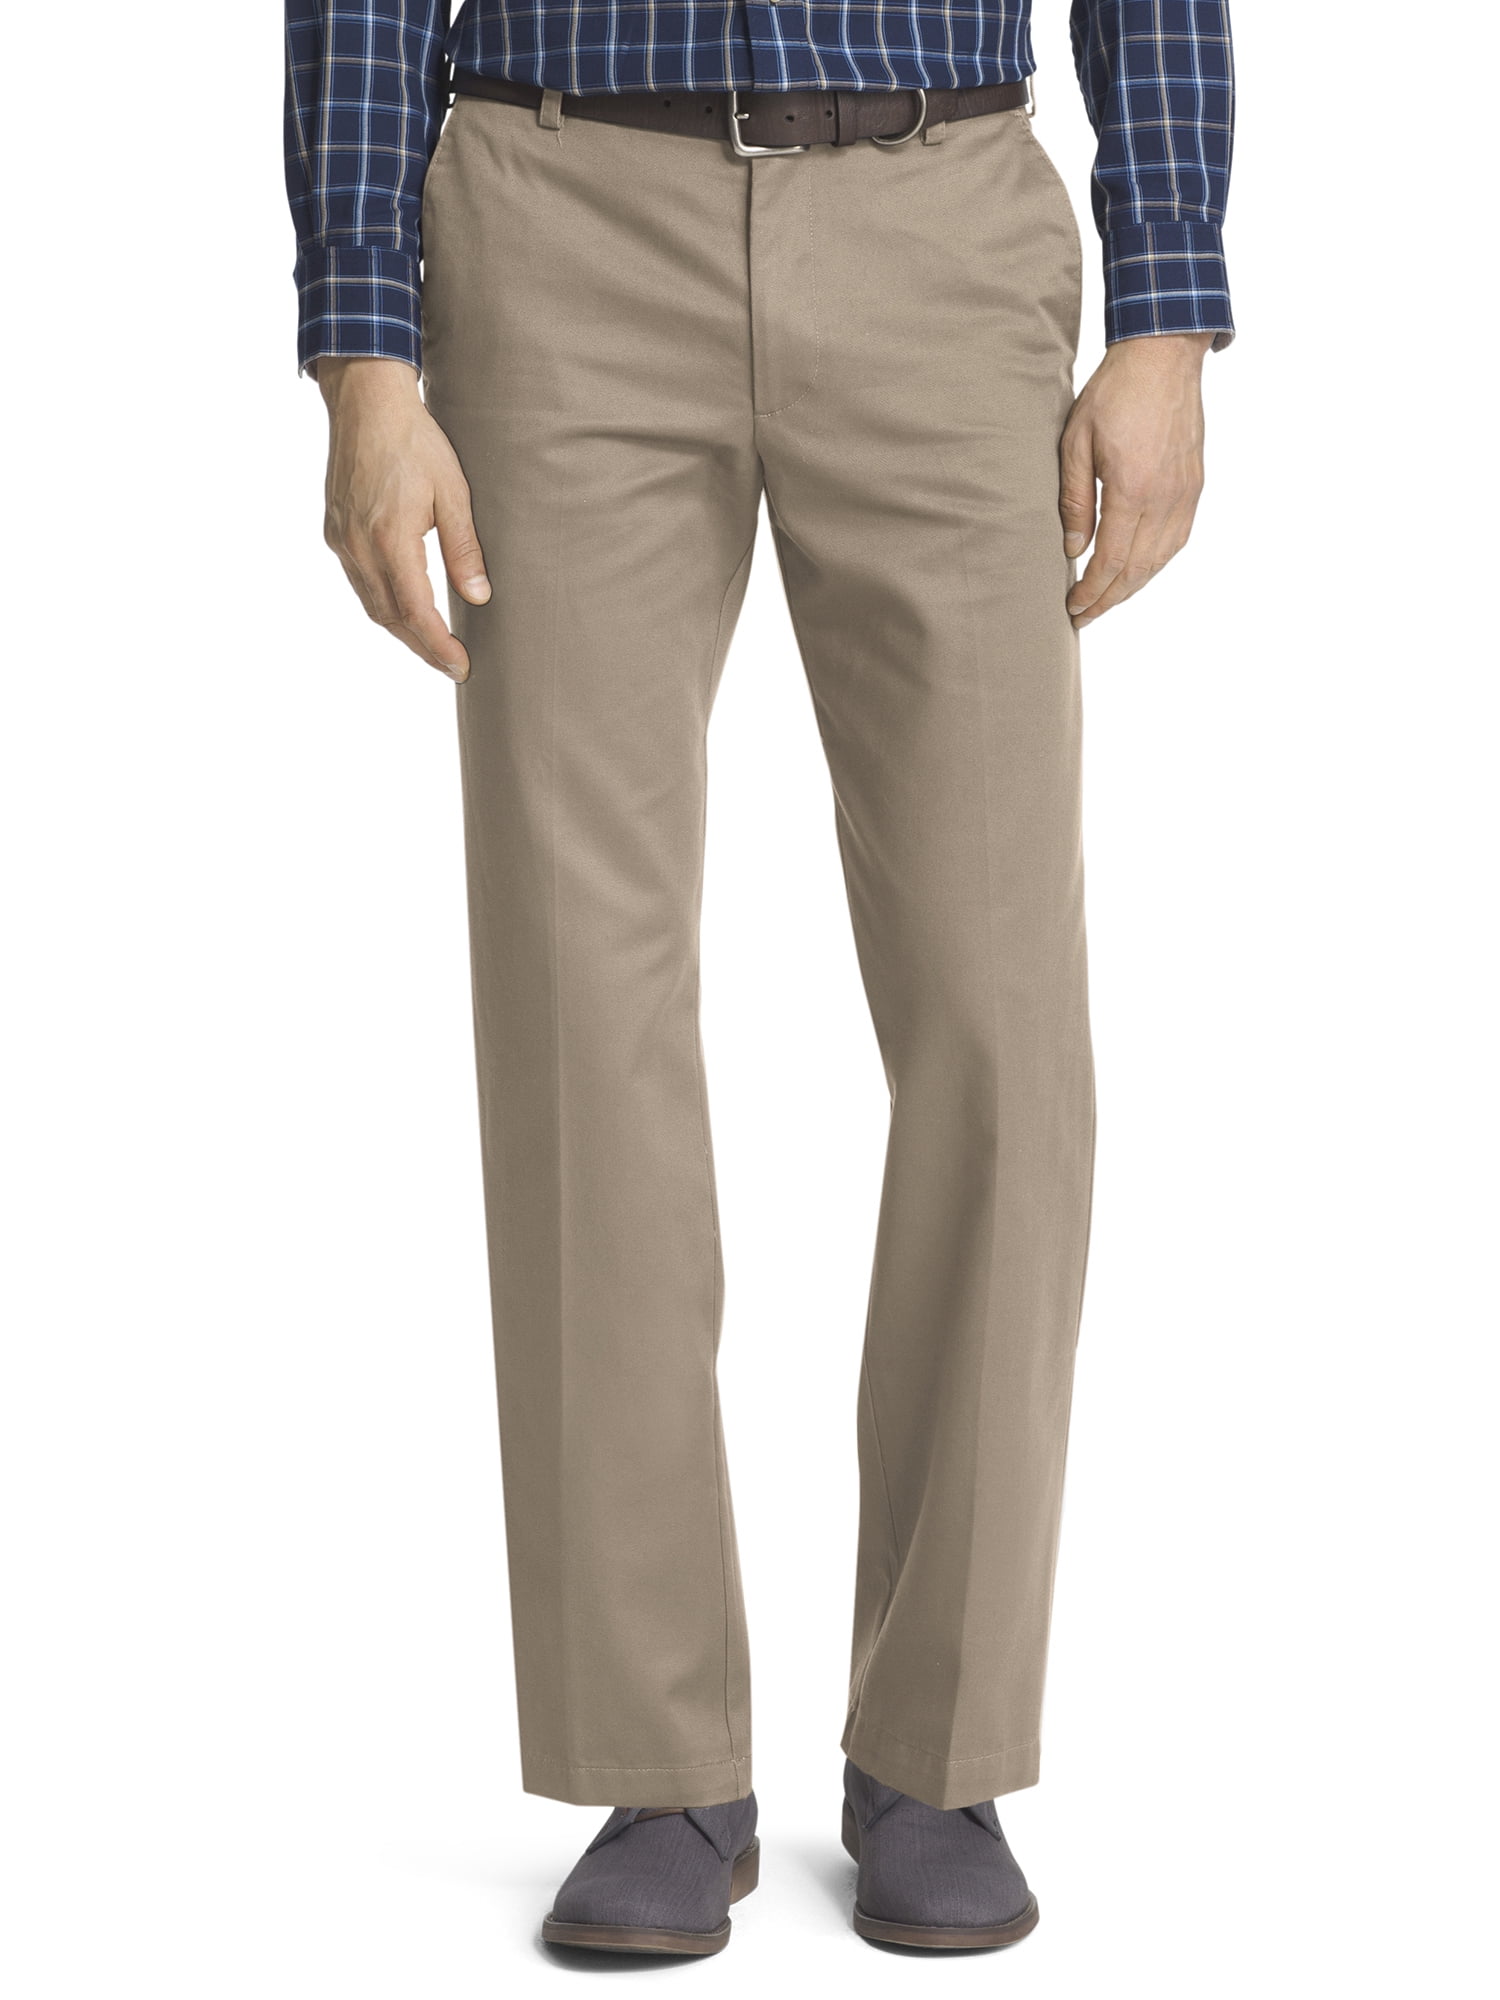 IZOD - IZOD Men's American Chino Straight Fit Flat Front Pant - Walmart ...